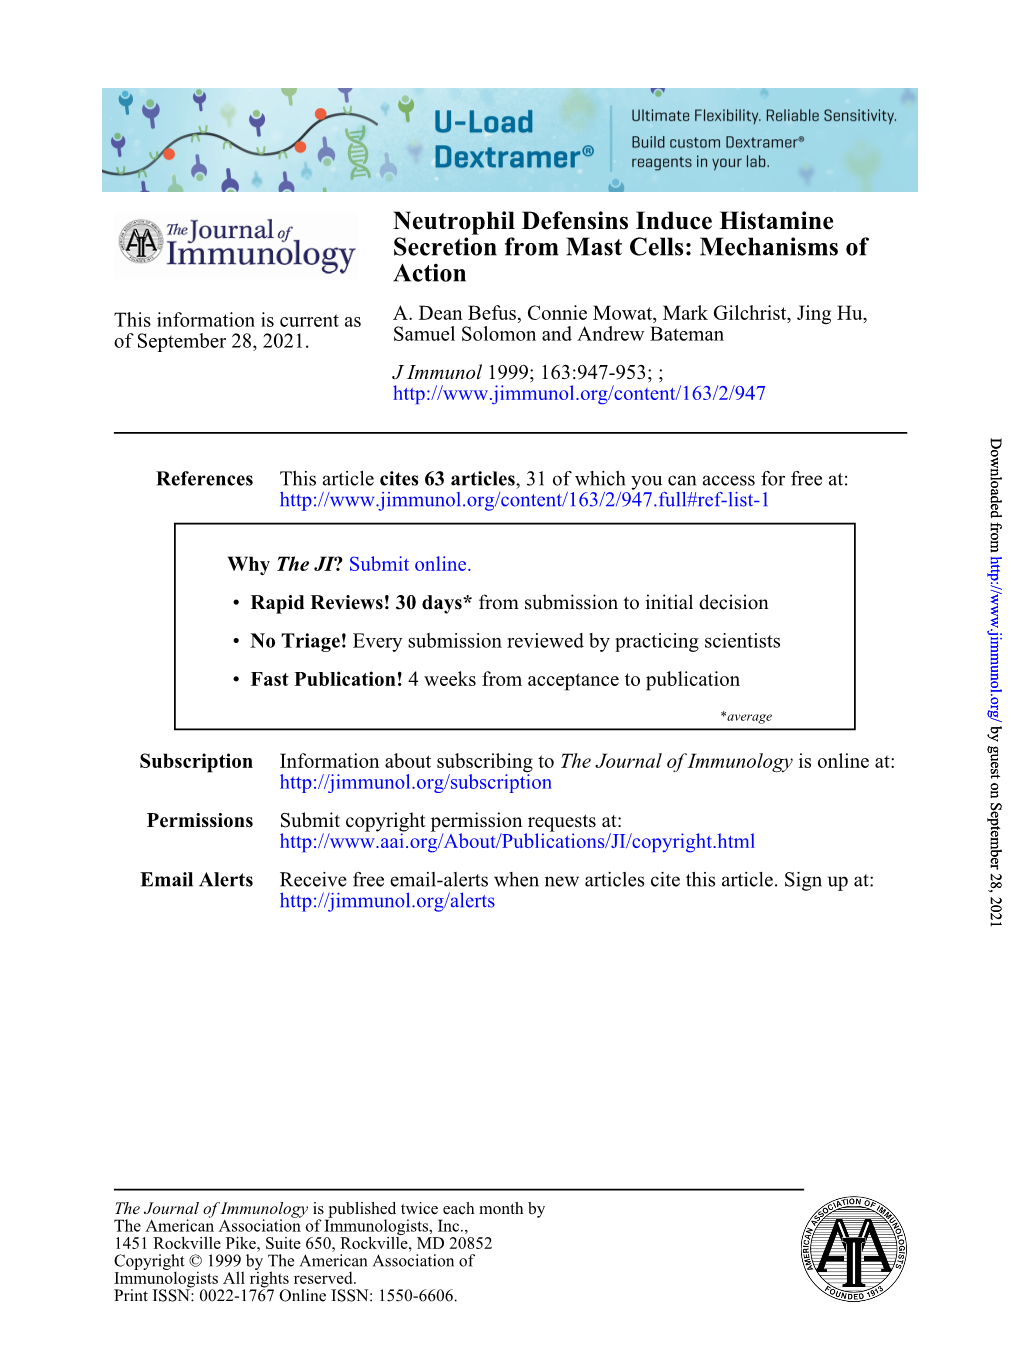 Mechanisms of Neutrophil Defensins Induce Histamine